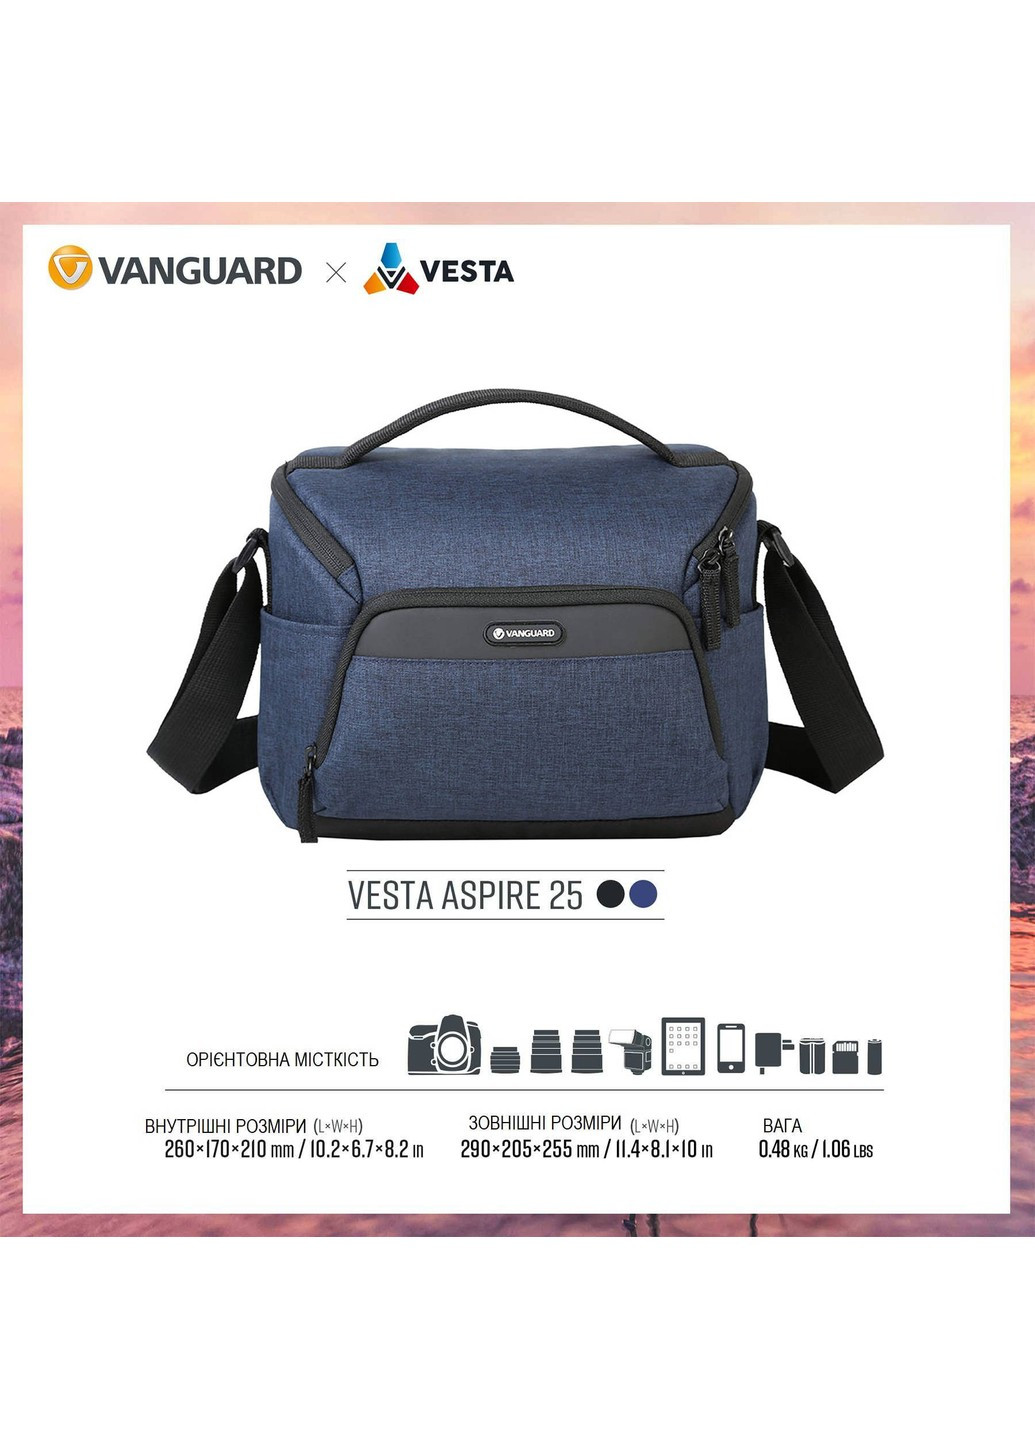 Сумка Vesta Aspire 25 Navy (Vesta Aspire 25 NV) Vanguard (252821619)